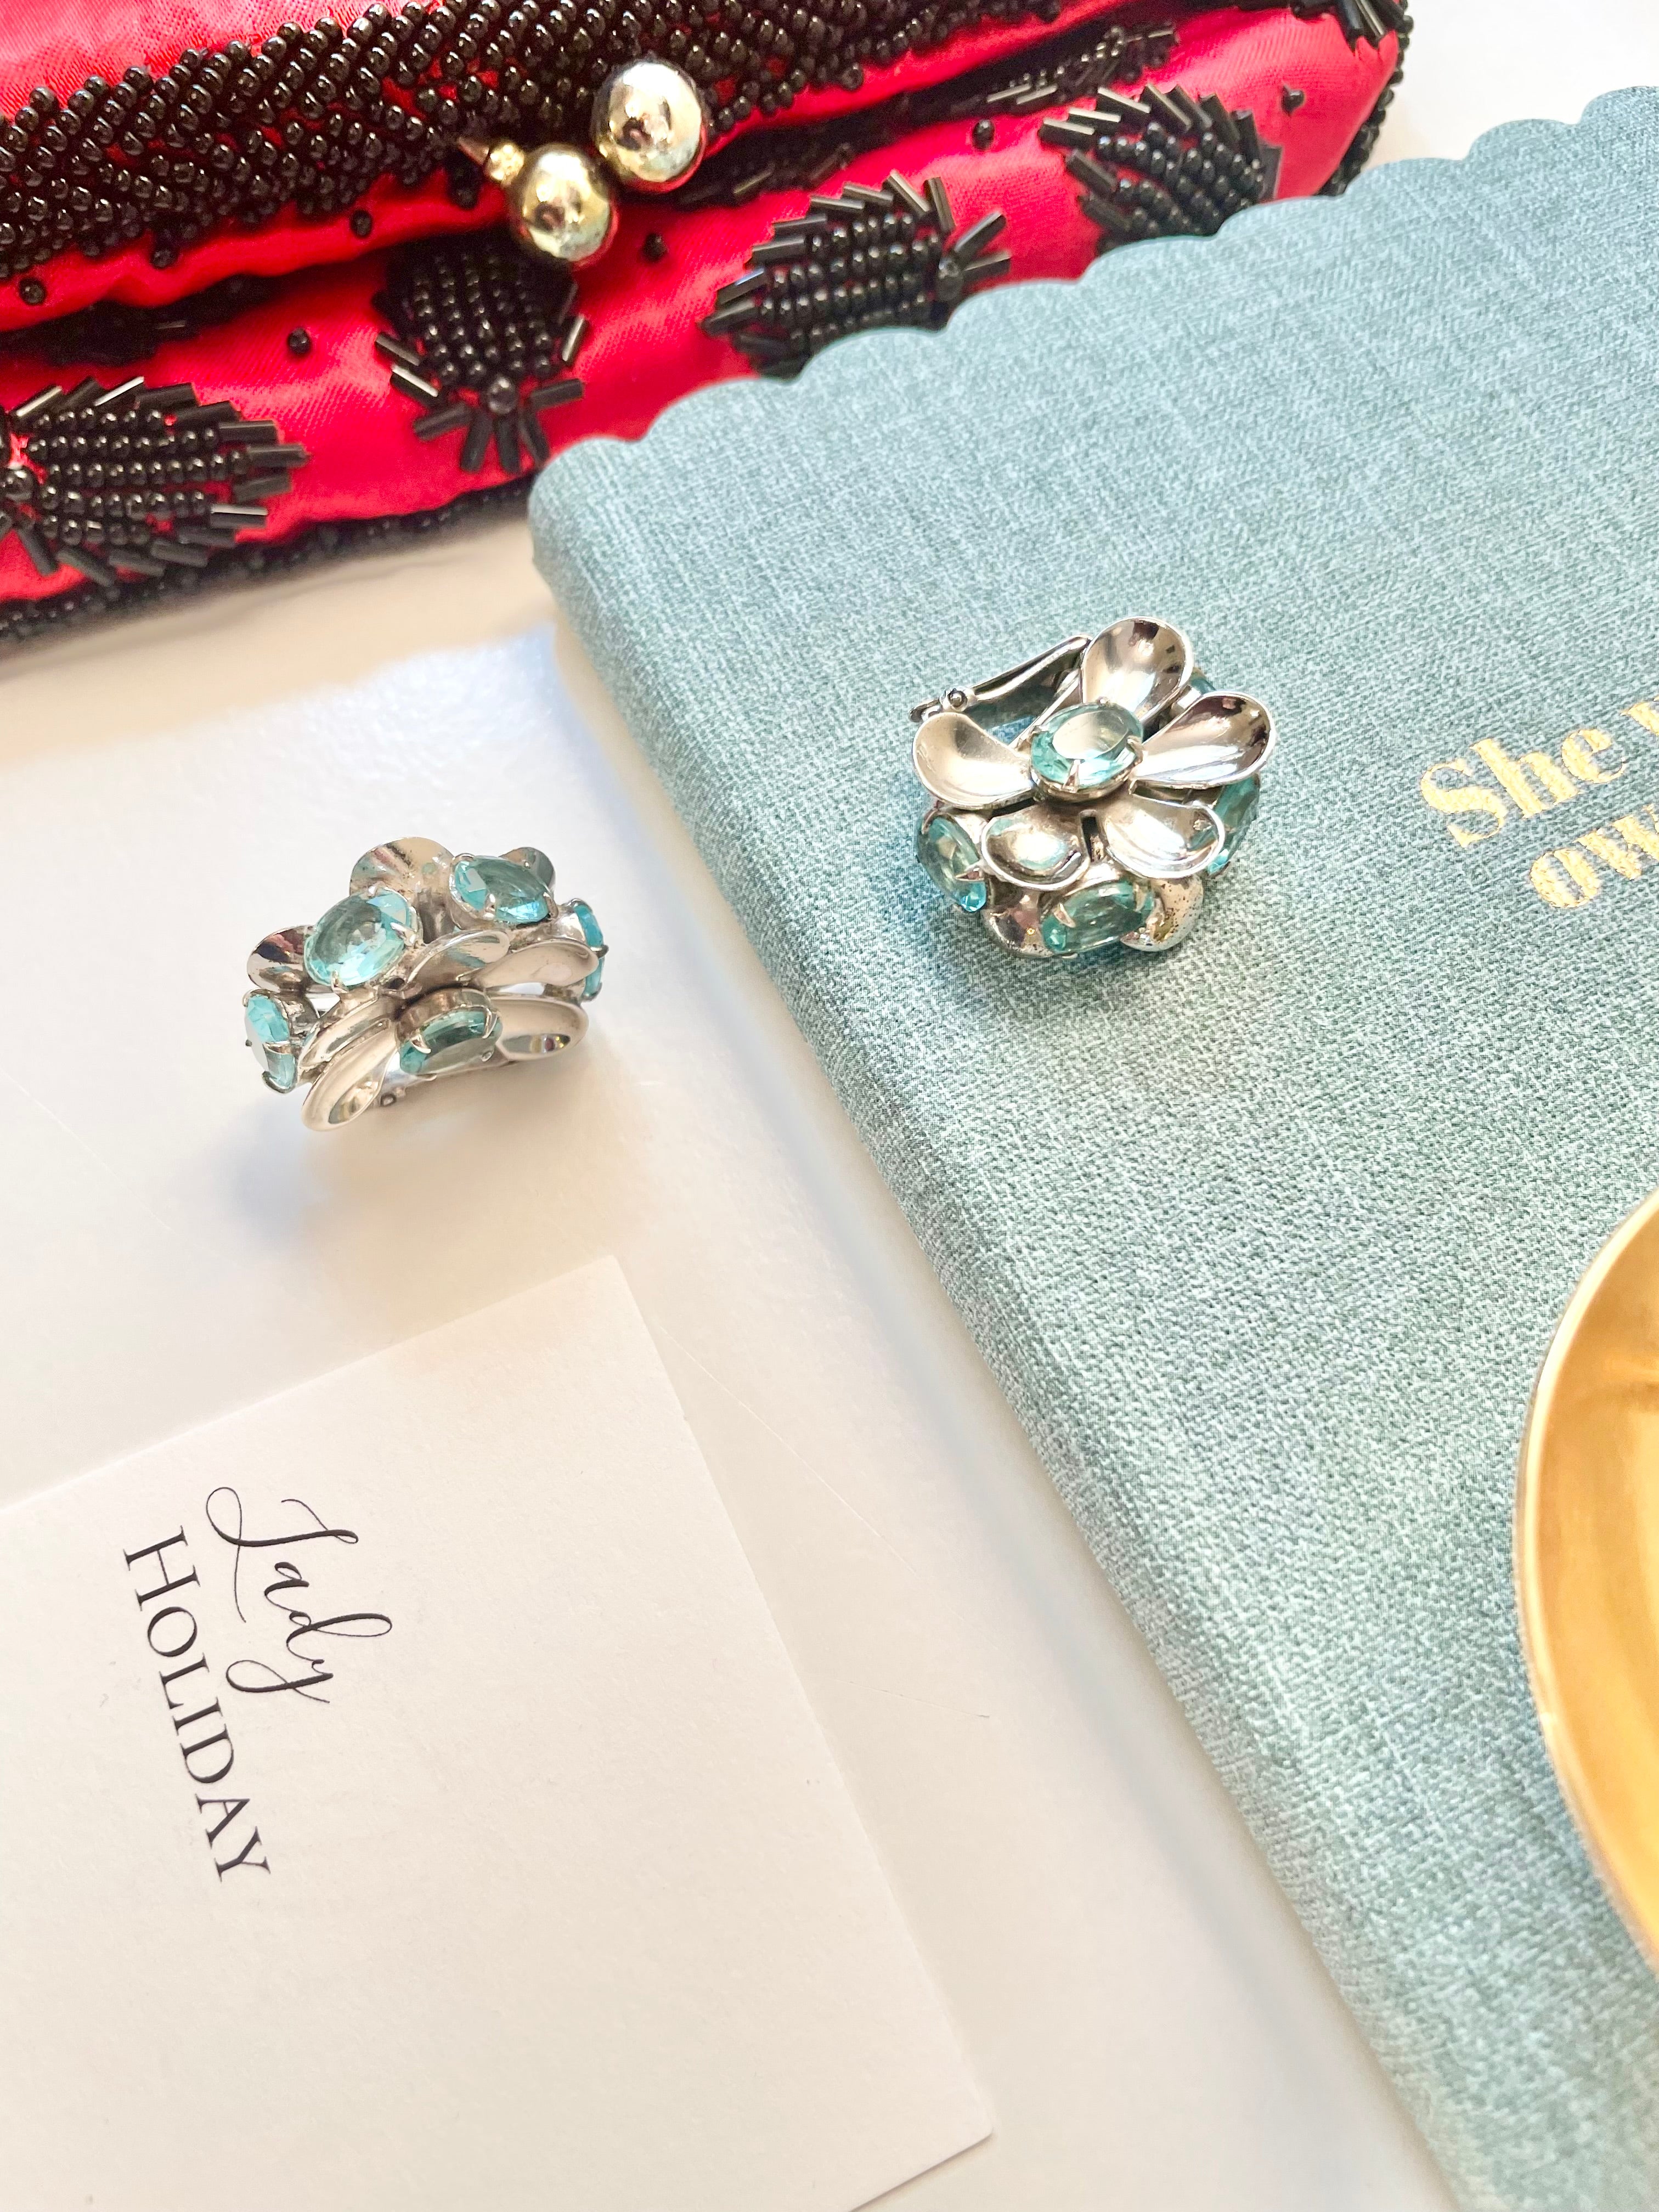 Vintage 1950's elegant silver, and blue topaz flower earrings, so unique